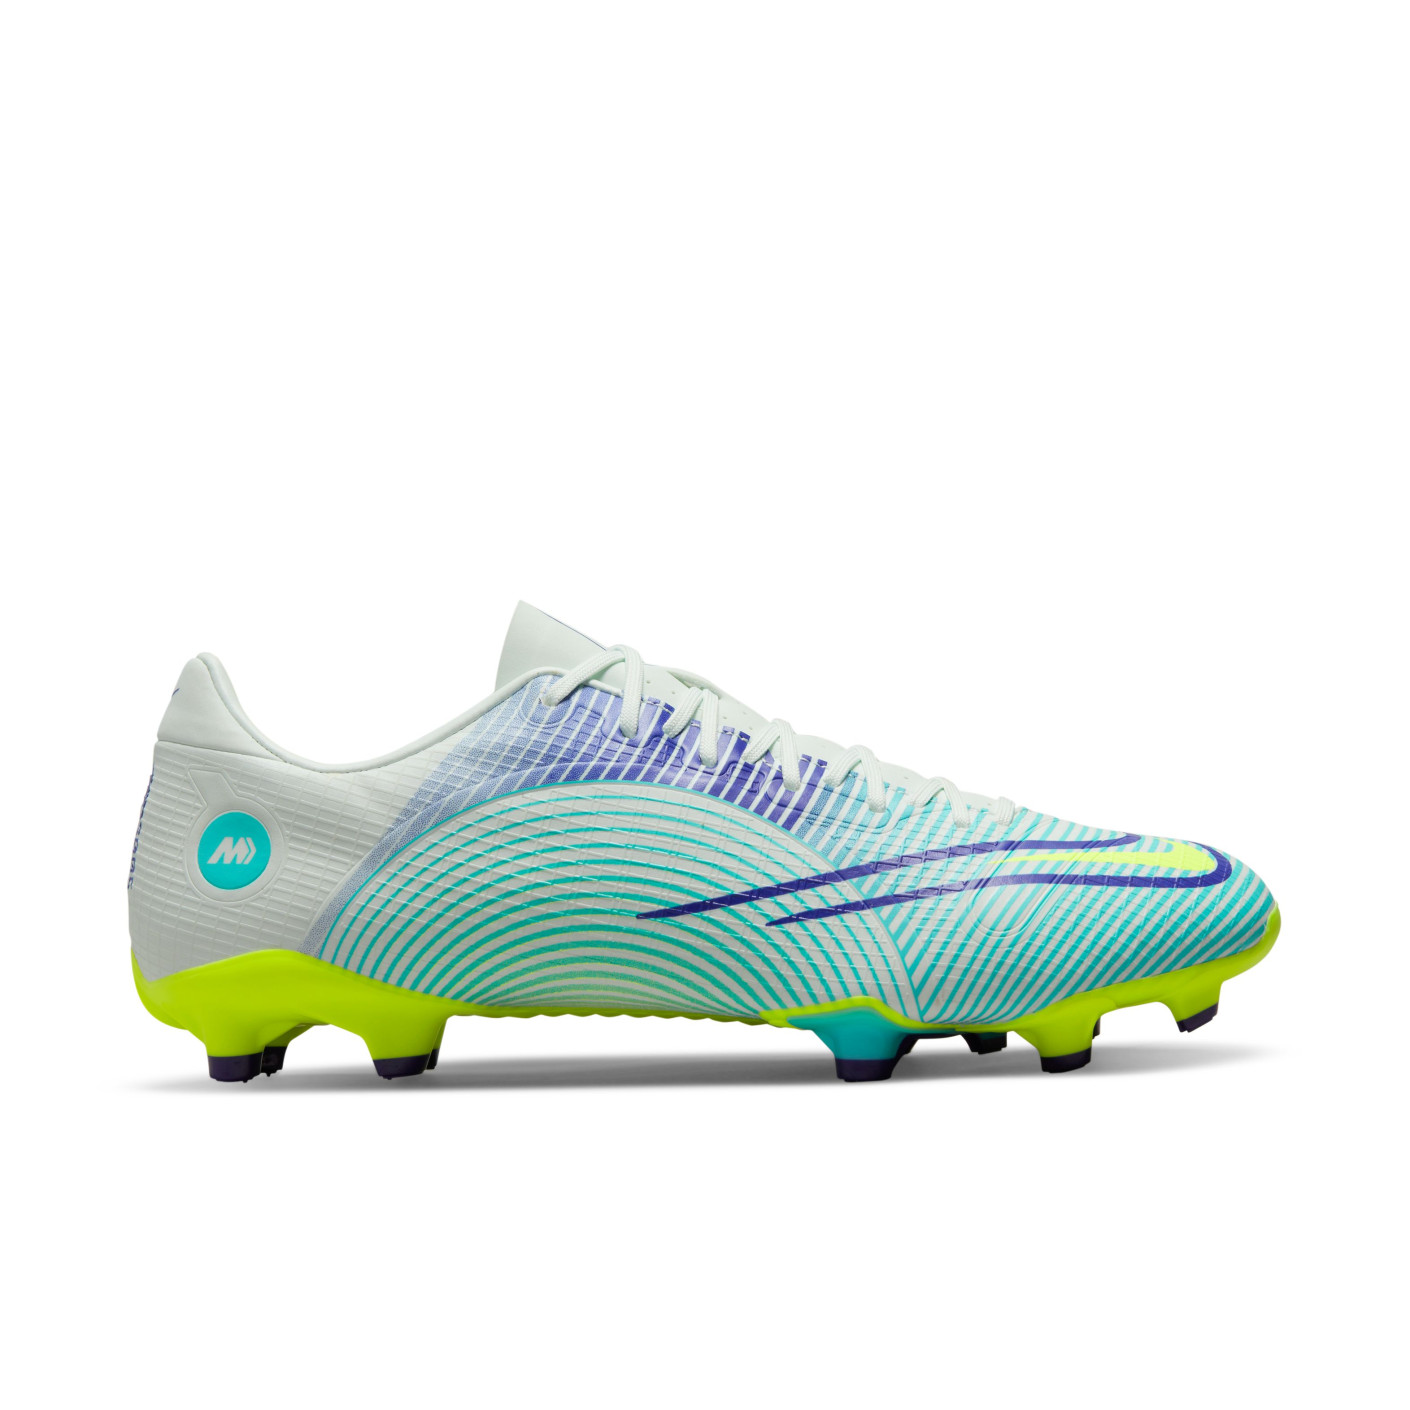 Nike Mercurial Vapor 14 Academy Grass /Artificial Turf Football Shoes (MG) Green Blue Yellow White